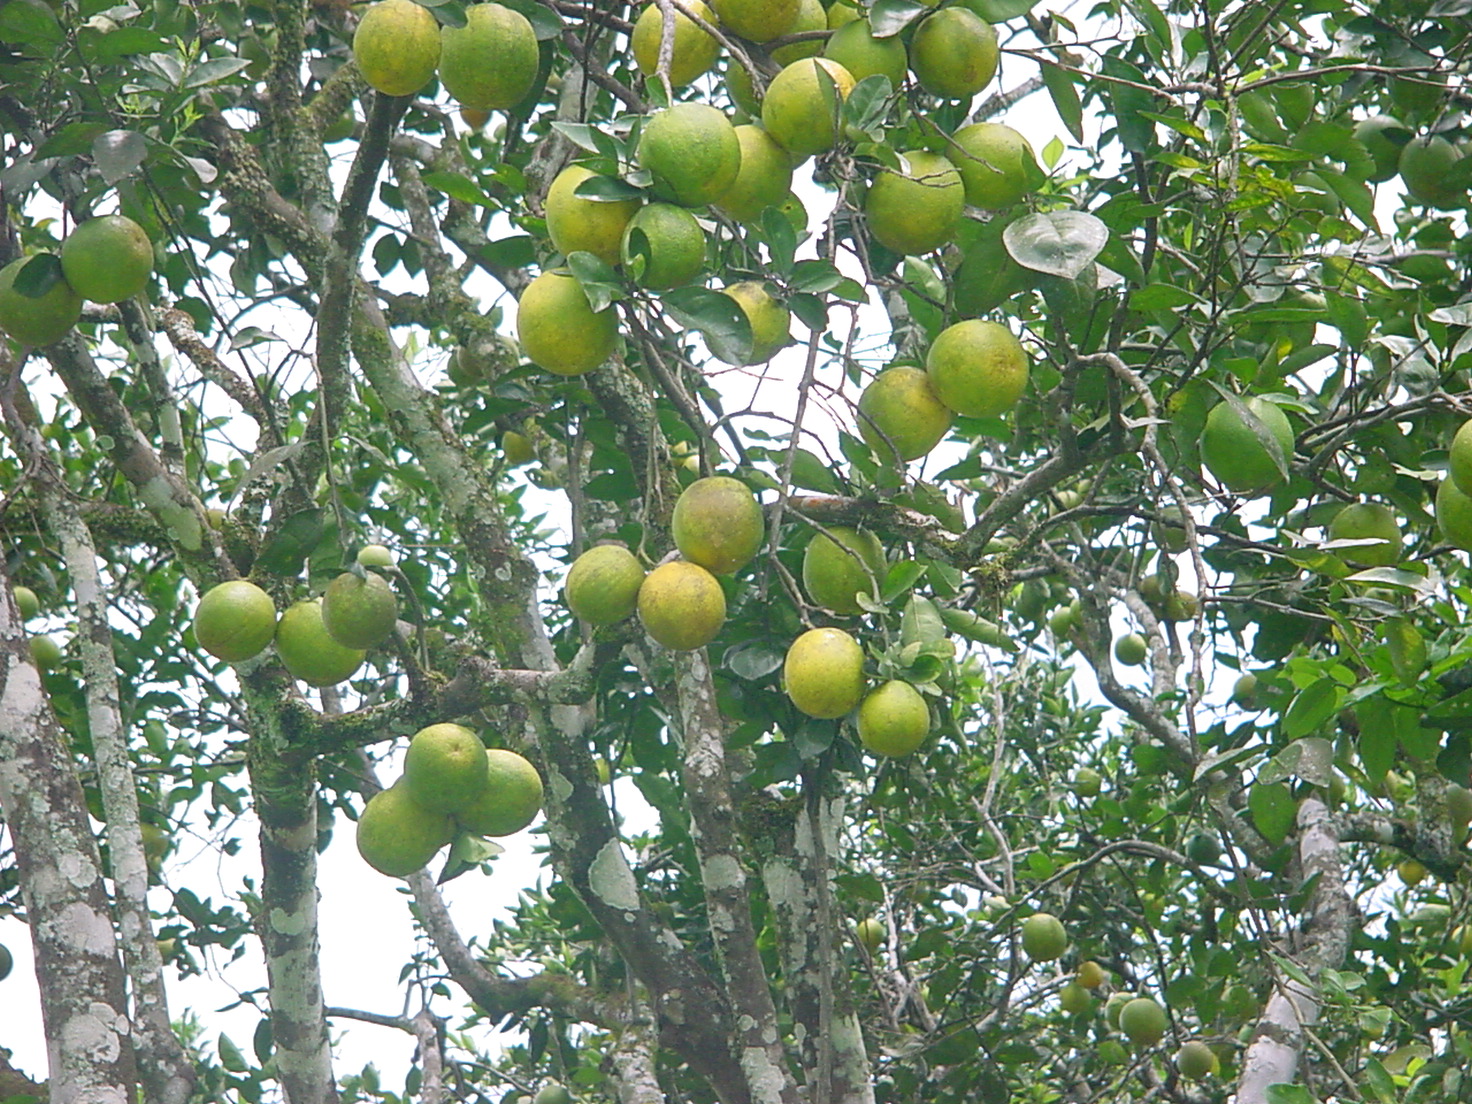 Adult cultivation of var. Valencia orange (Citrus sinensis L. Osbeck). Photo: J.A. Cleves-Leguízamo